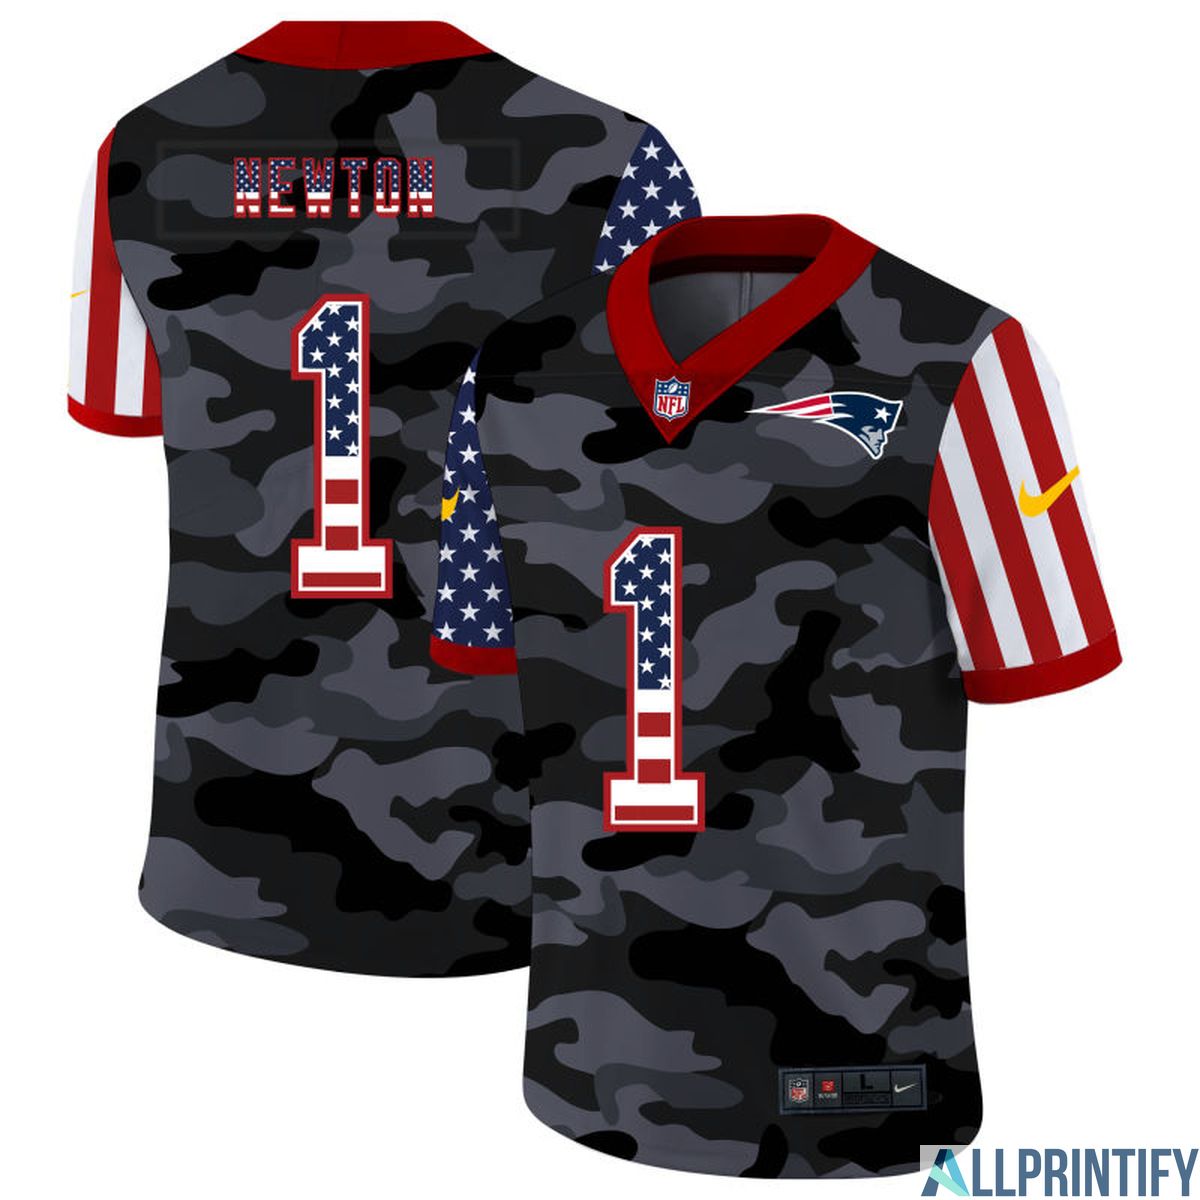 bills military jersey